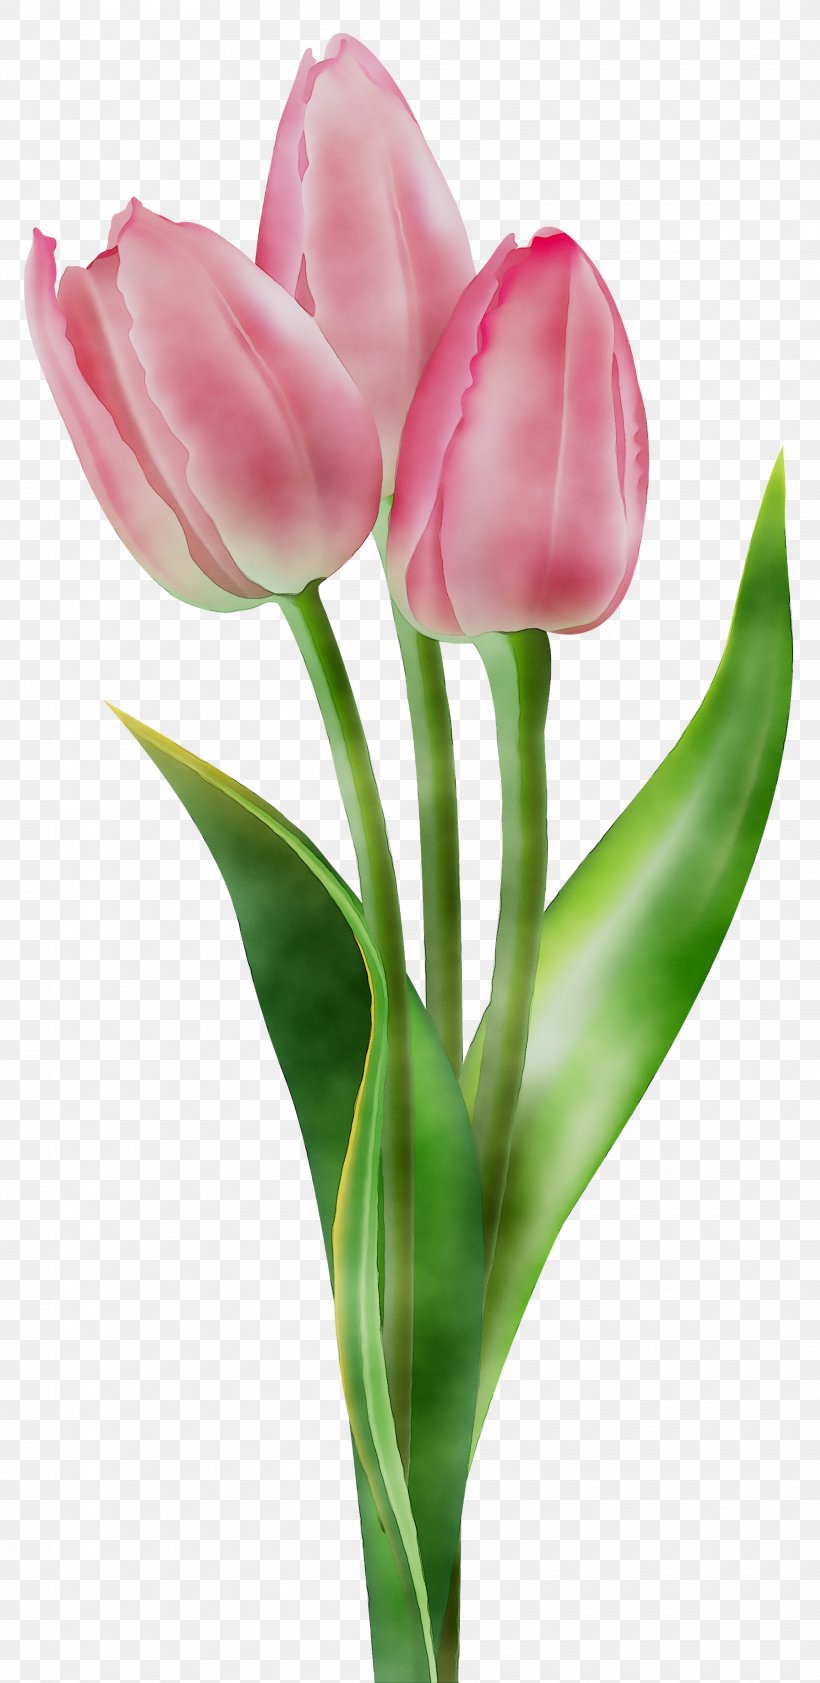 Indira Gandhi Memorial Tulip Garden Clip Art Image Illustration, PNG, 2070x4251px, Indira Gandhi Memorial Tulip Garden, Anthurium, Botany, Bud, Cut Flowers Download Free